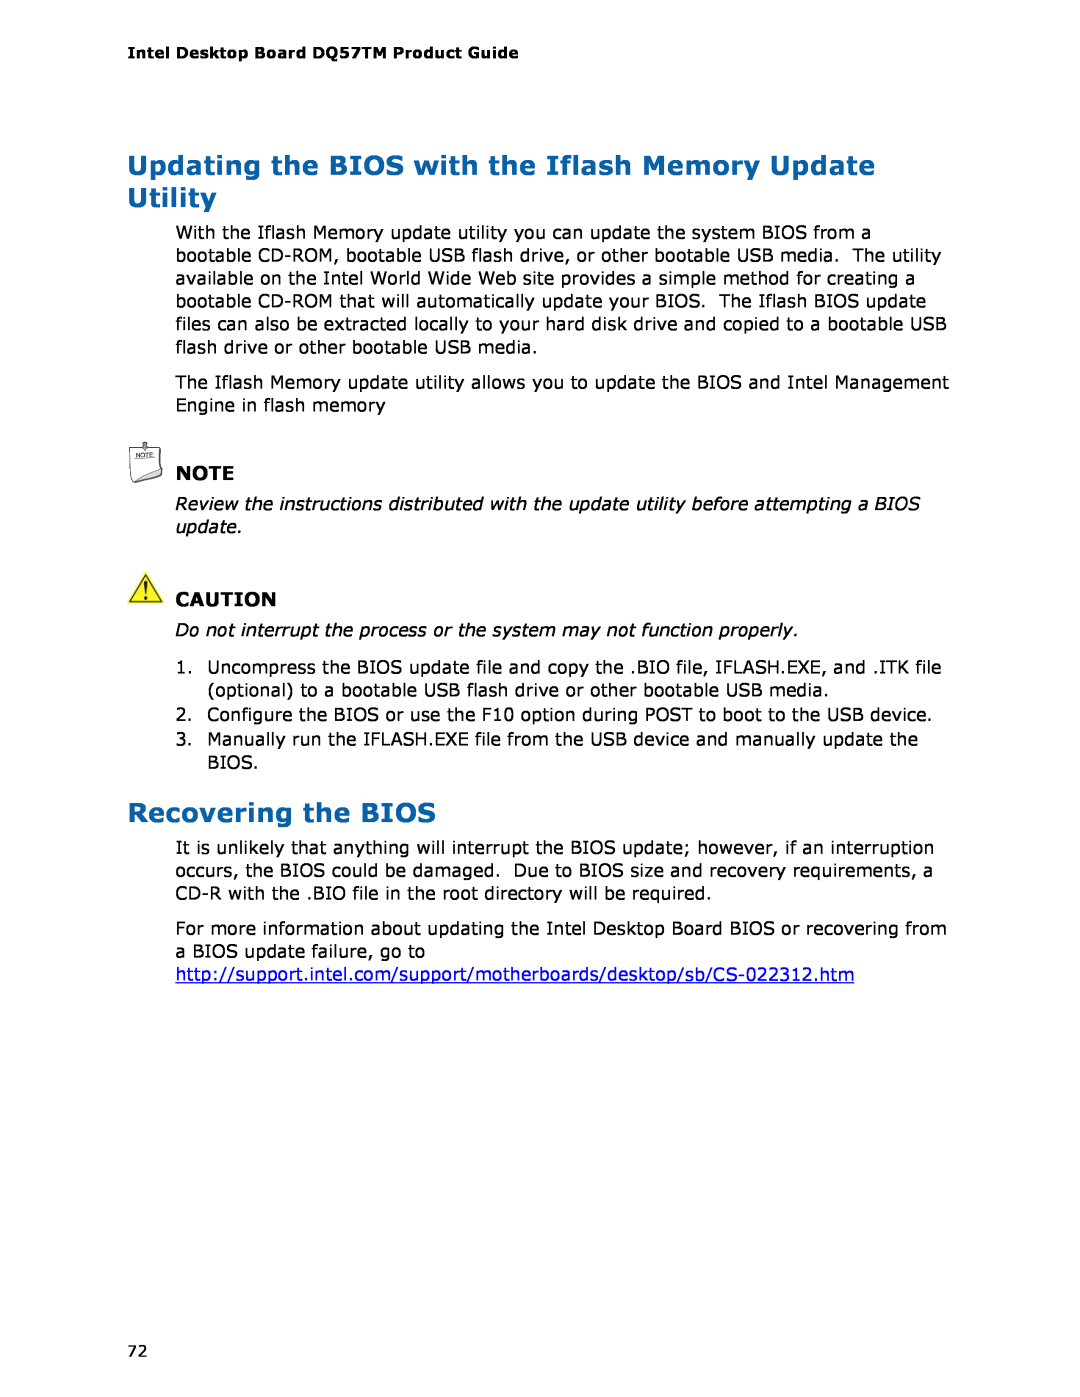 Intel DQ57TM manual Recovering the BIOS 